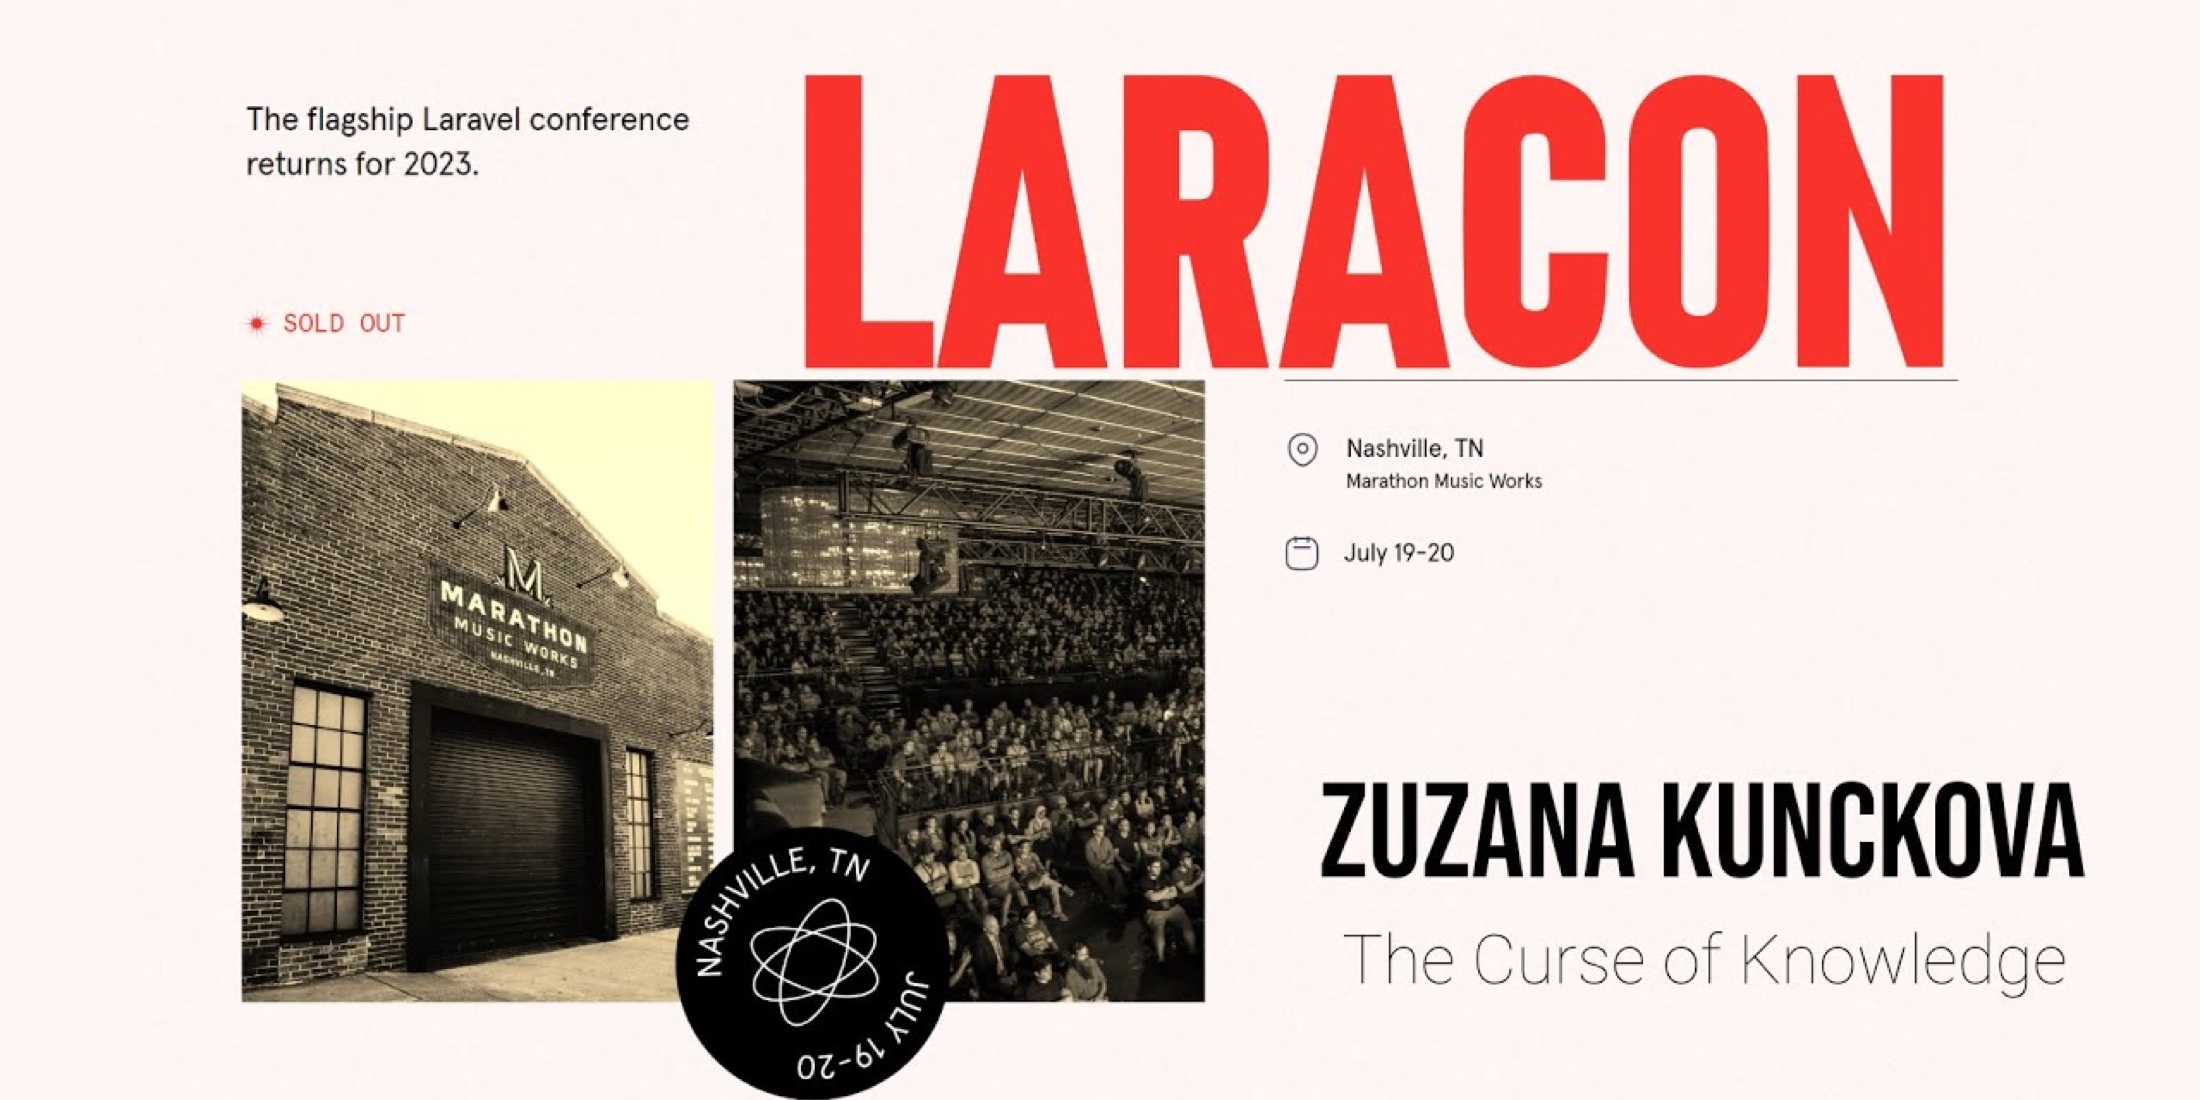 Watch Zuzana Kunckova's "The Curse of Knowledge" talk from Laracon image